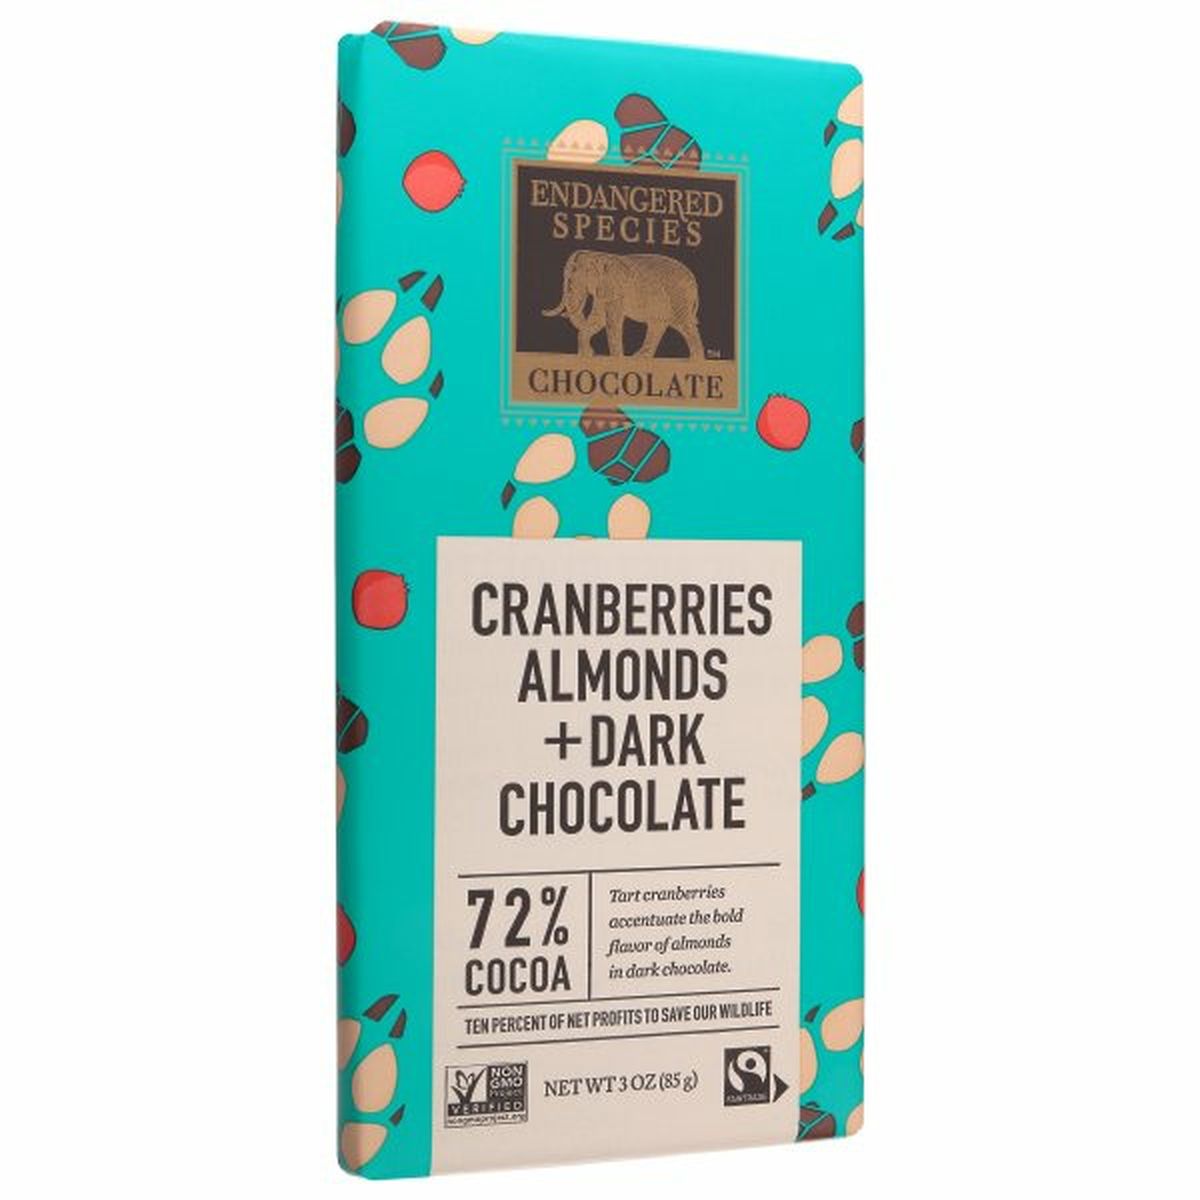 Calories in Endangered Species Chocolate, Cranberries Almonds + Dark Chocolate, 72% Cocoa